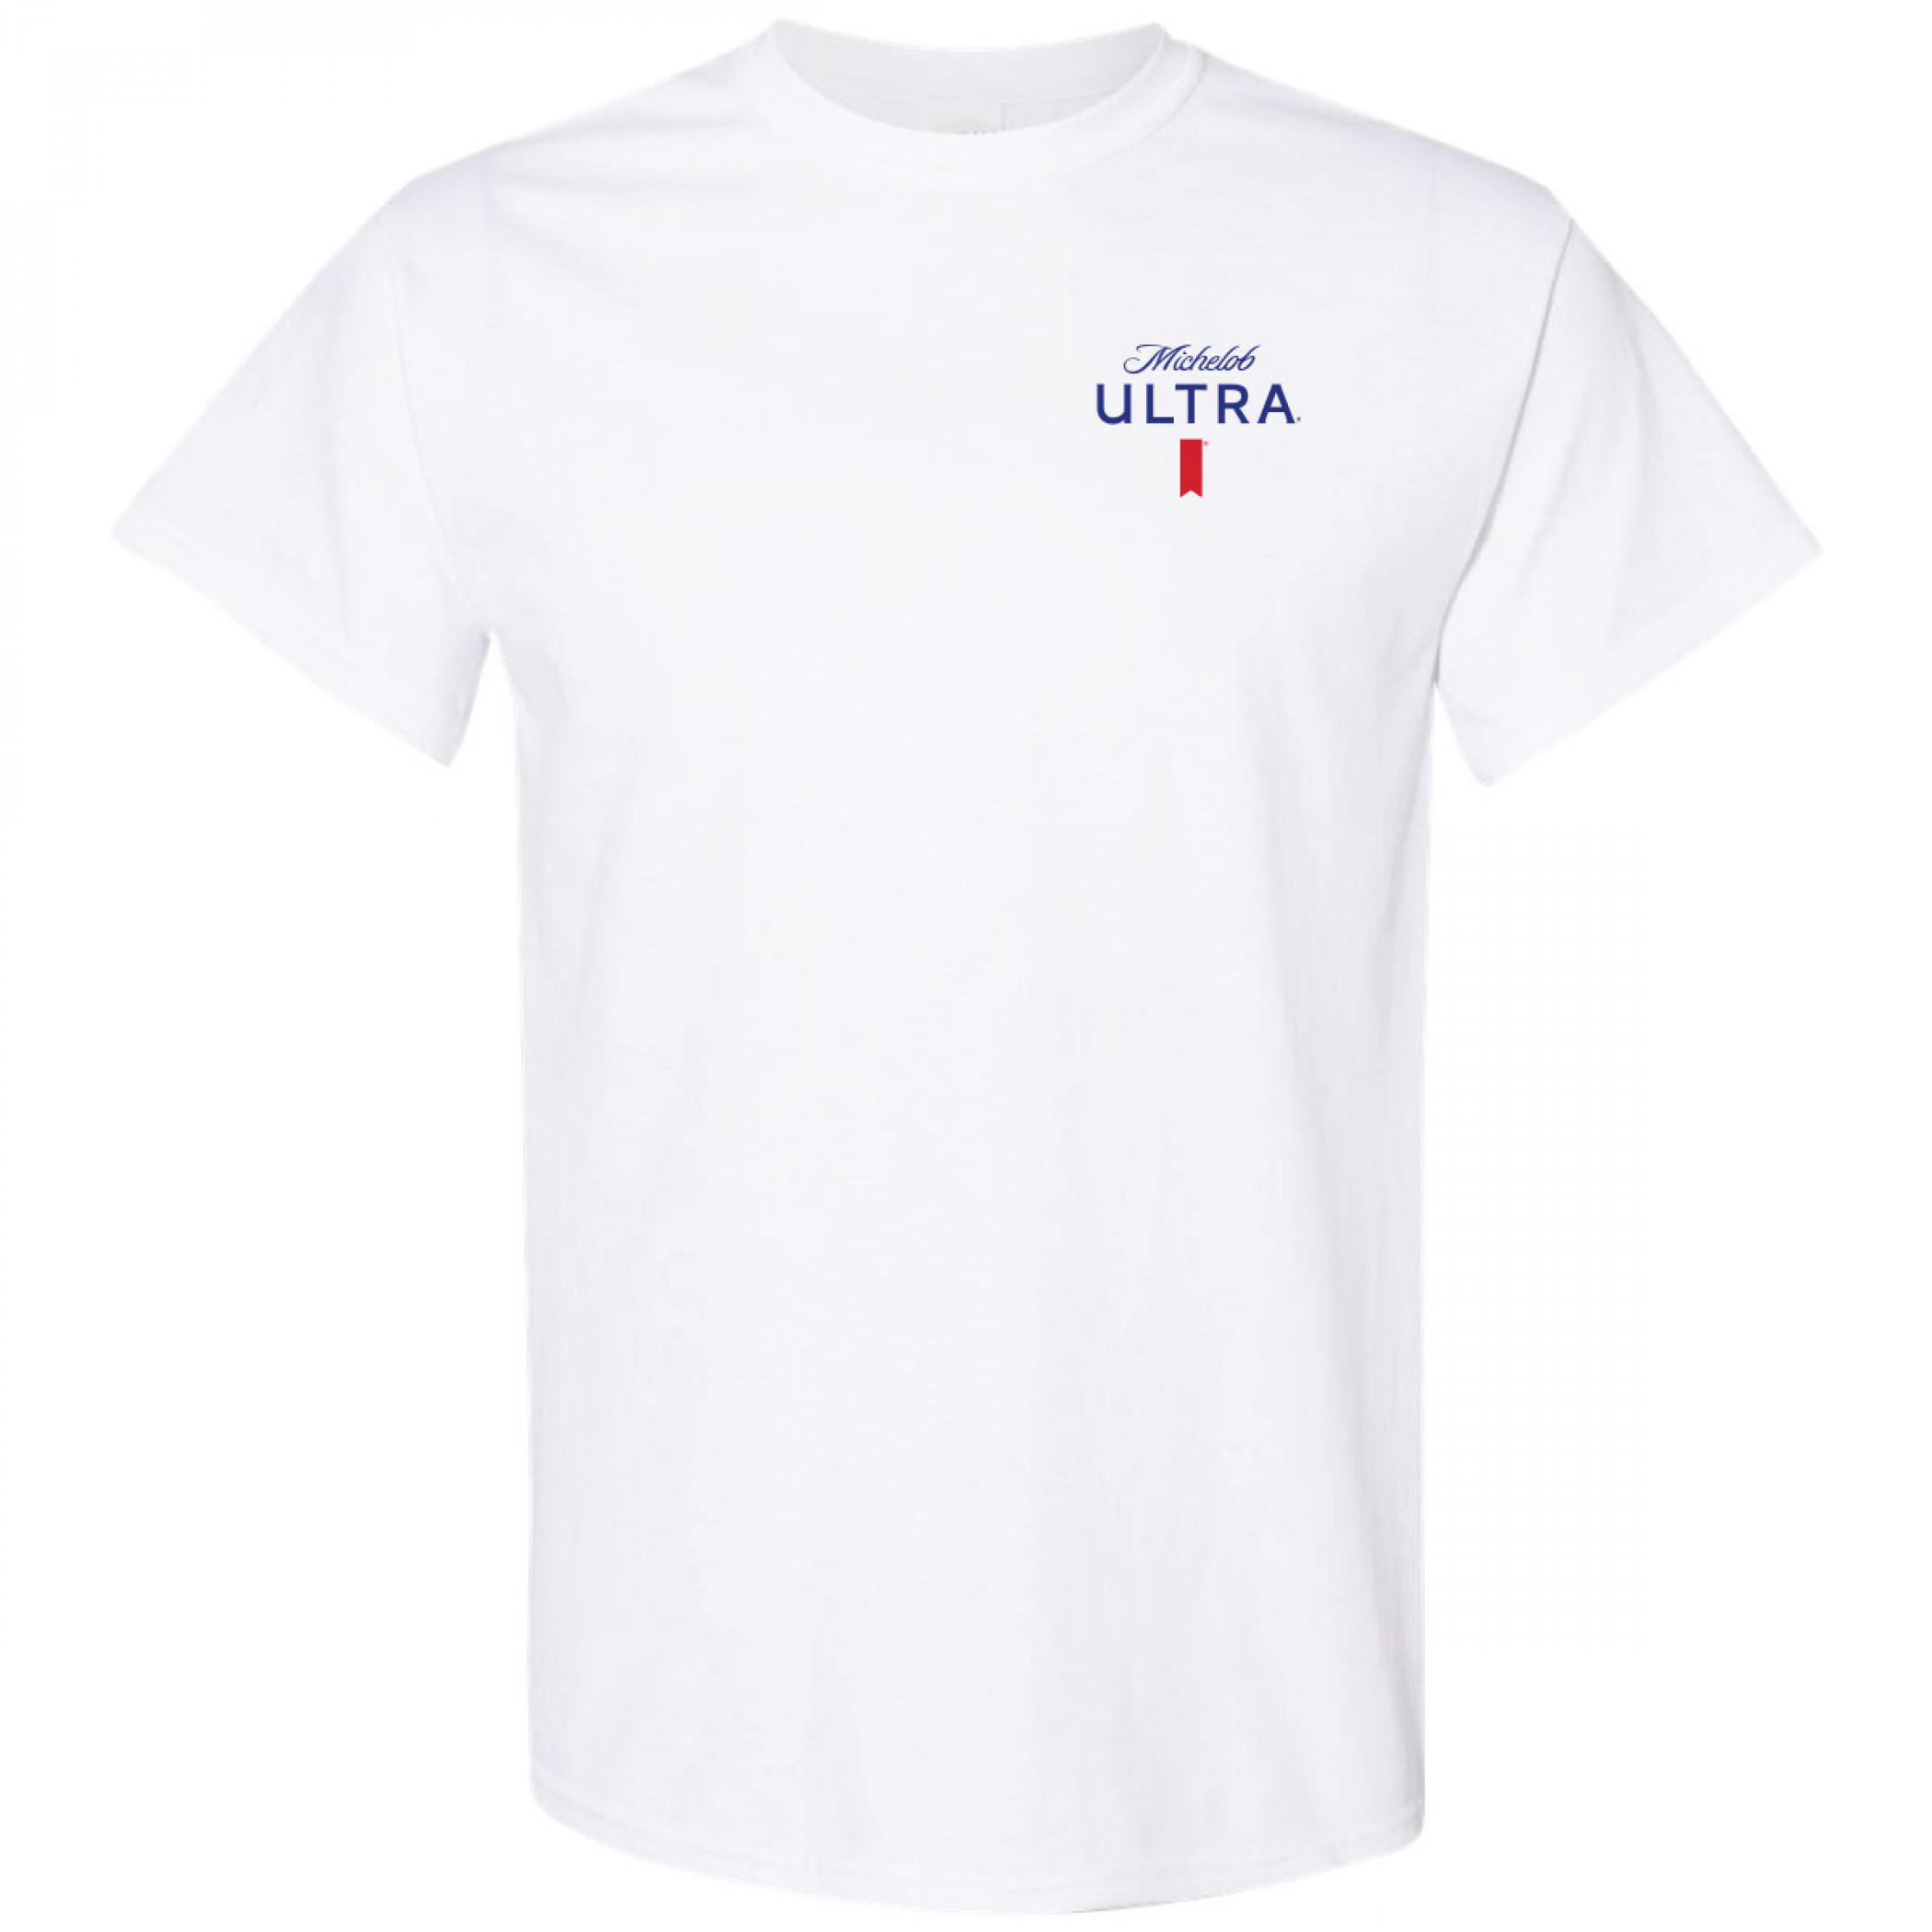 Michelob Ultra Golf Scorecard White Colorway Front/Back Print T-Shirt